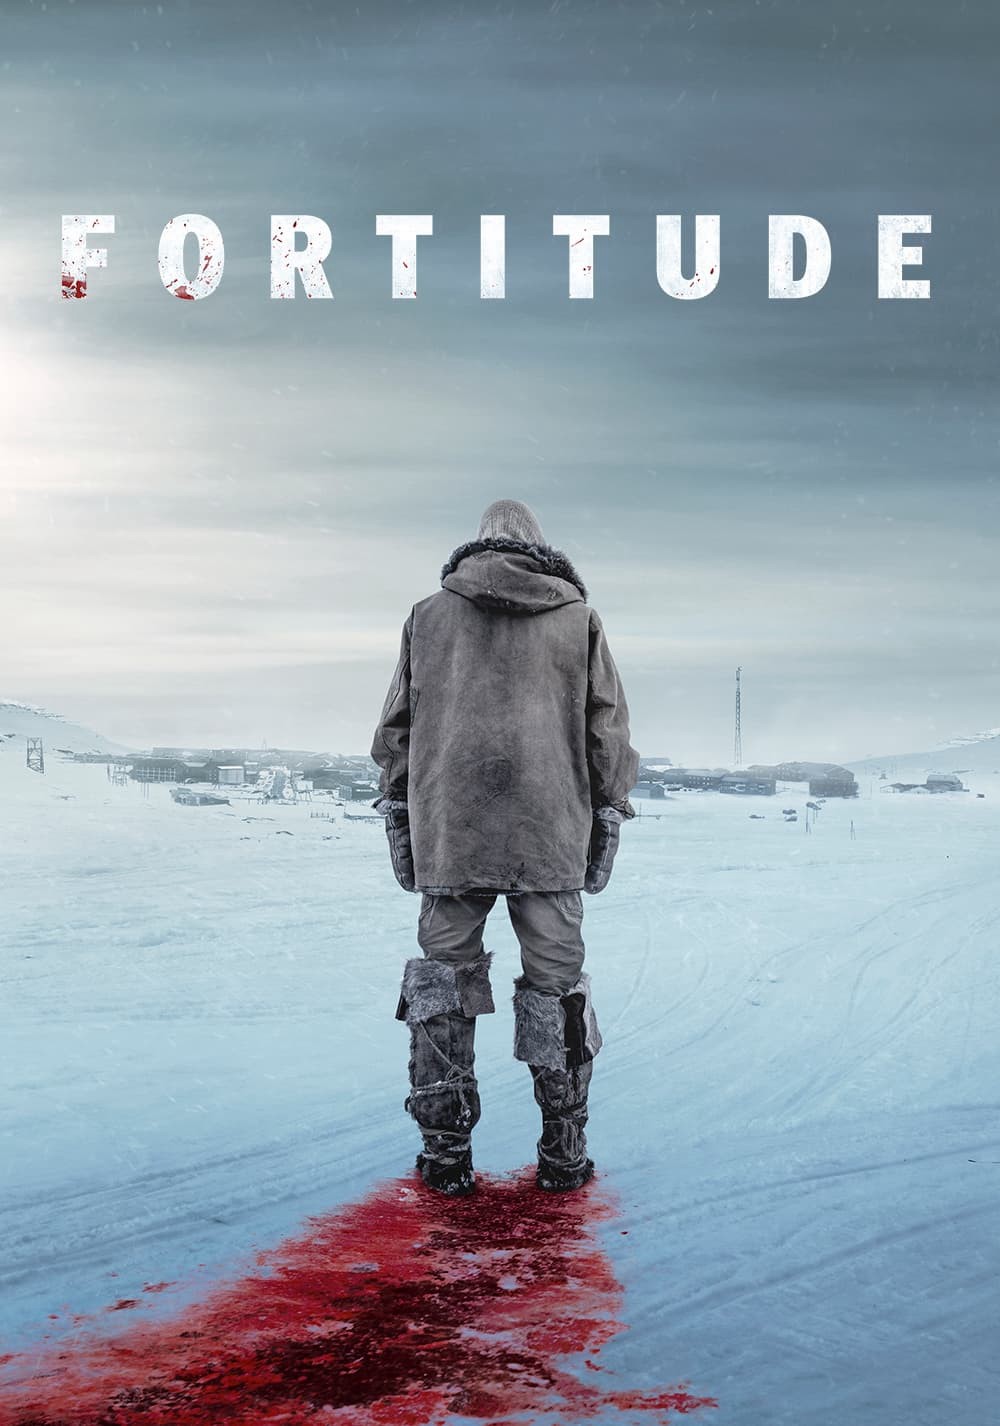 Fortitude (Phần 3) - Fortitude (Phần 3) (2015)